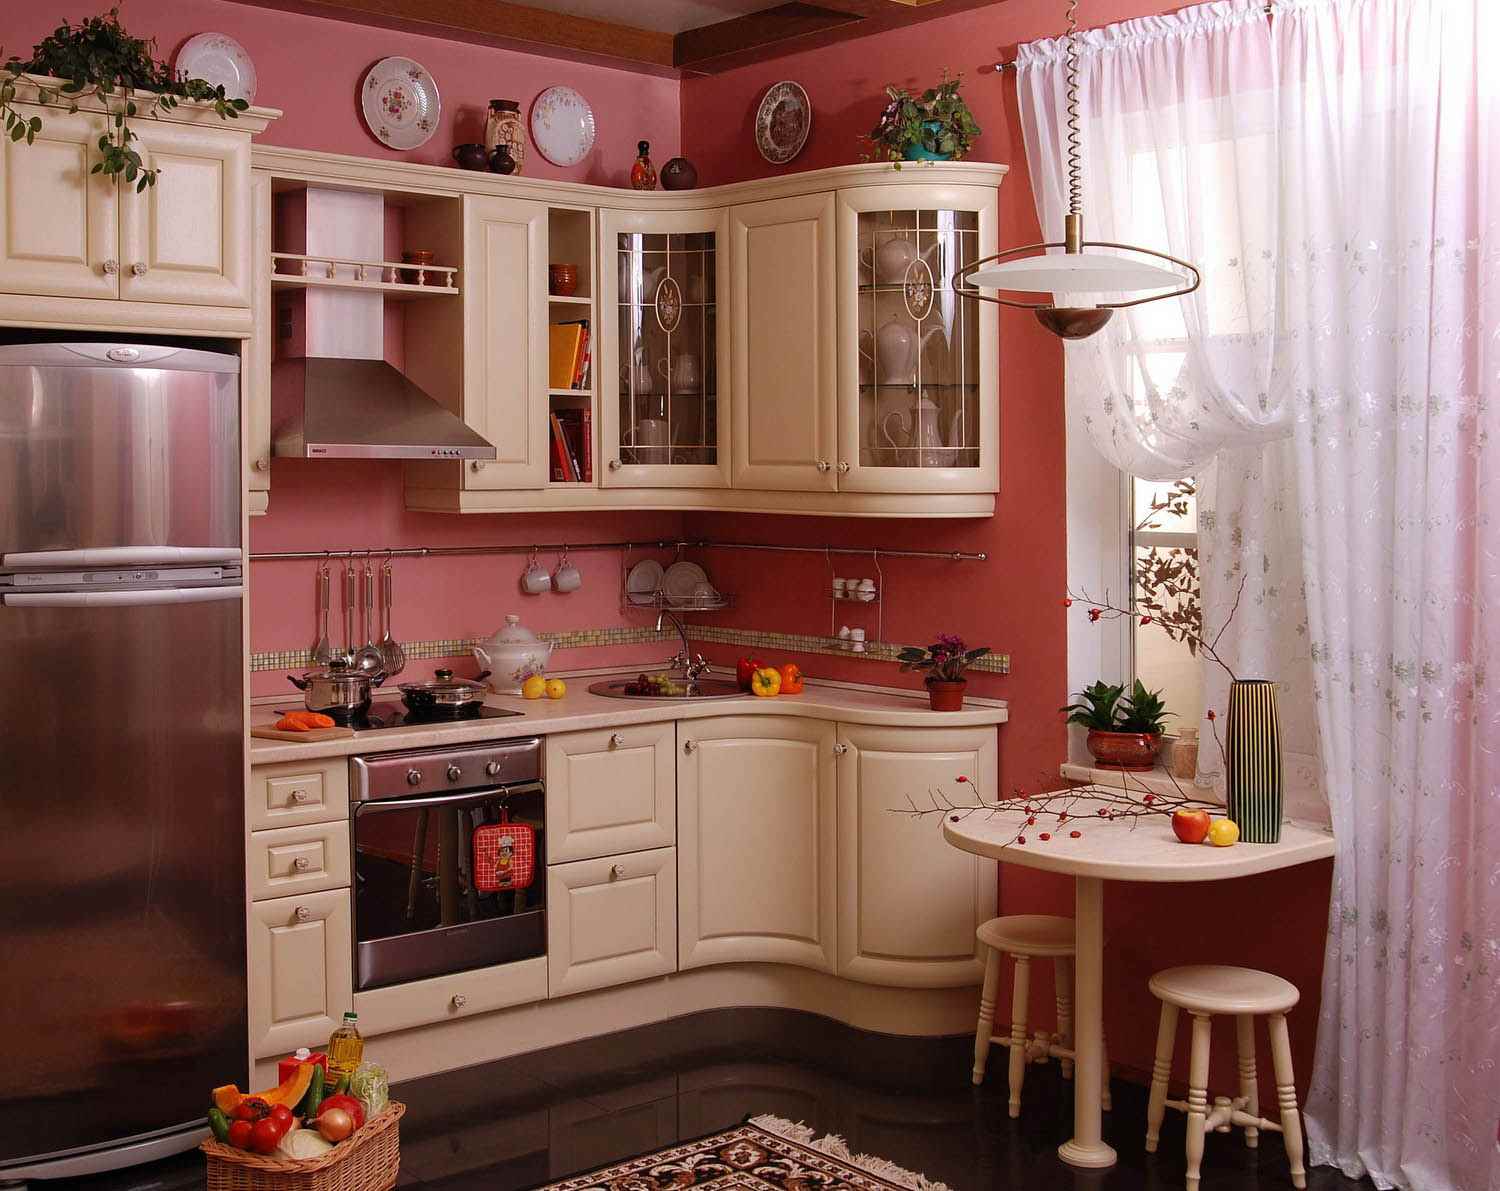 option for a bright kitchen interior 7 sq.m